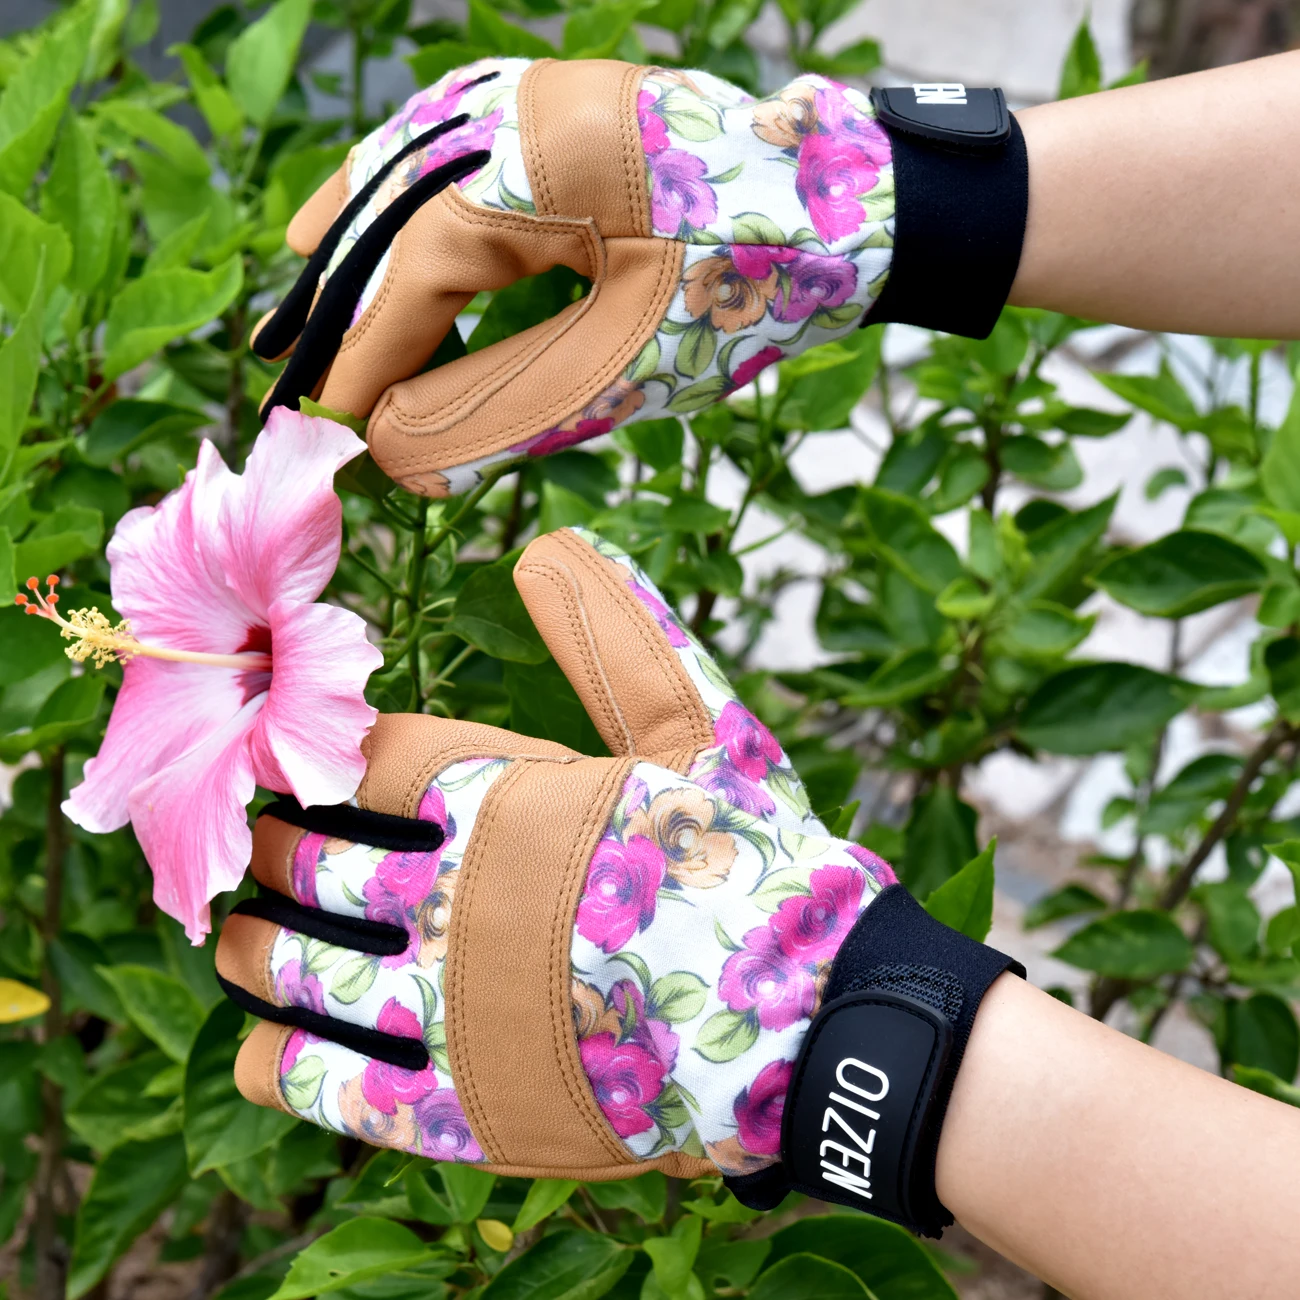 

1 Pair Goatskin Leather Garden Gloves for Women Thorn Proof Working Gardening Gloves for Weeding Digging Planting Rose Flower